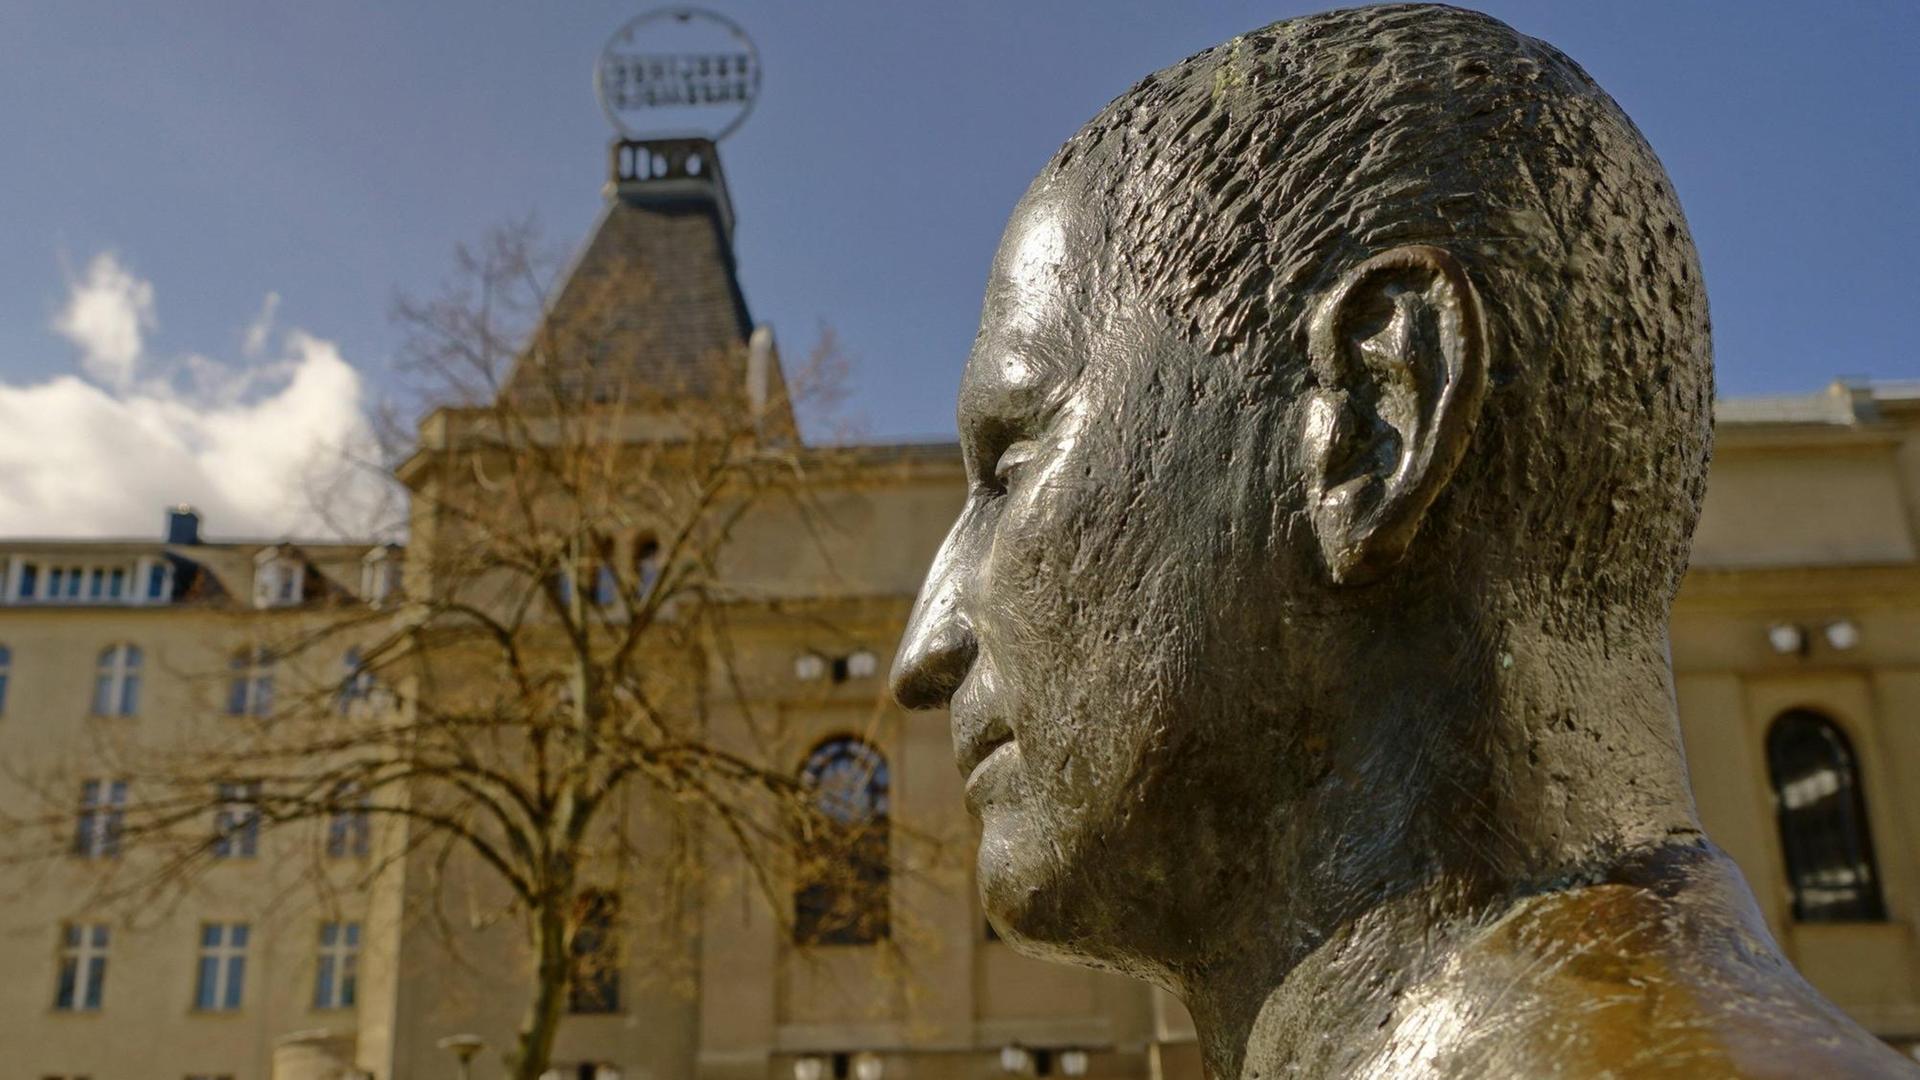 Bertolt-Brecht-Denkmal, Bronze-Plastik von Fritz Cremer, vor dem Berliner Ensemble, auf dem Bertolt-Brecht-Platz.